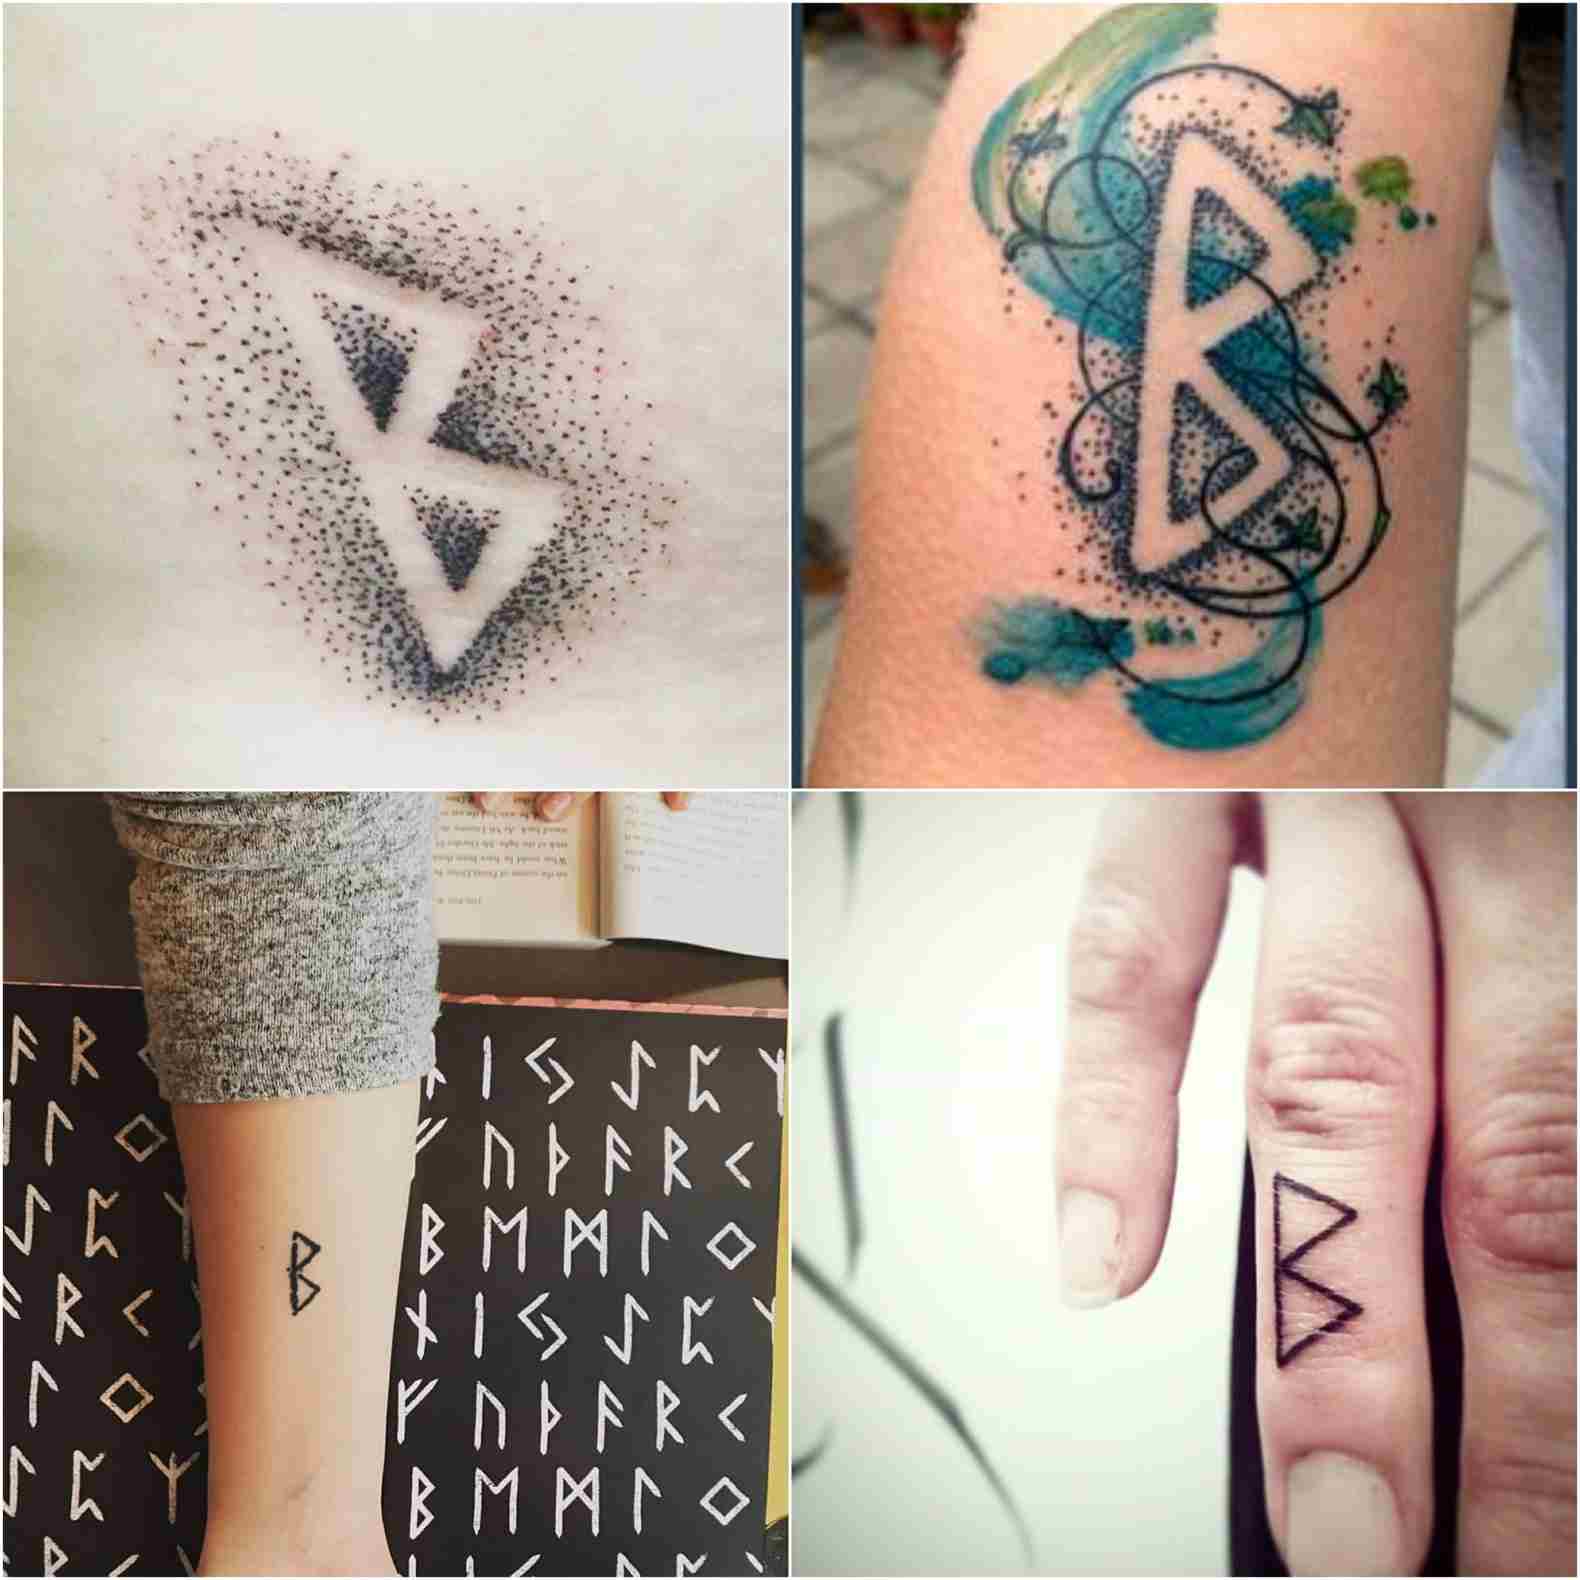 Berakana Vikinger Tattoo Design Ideas Forearm Tattoo For Women